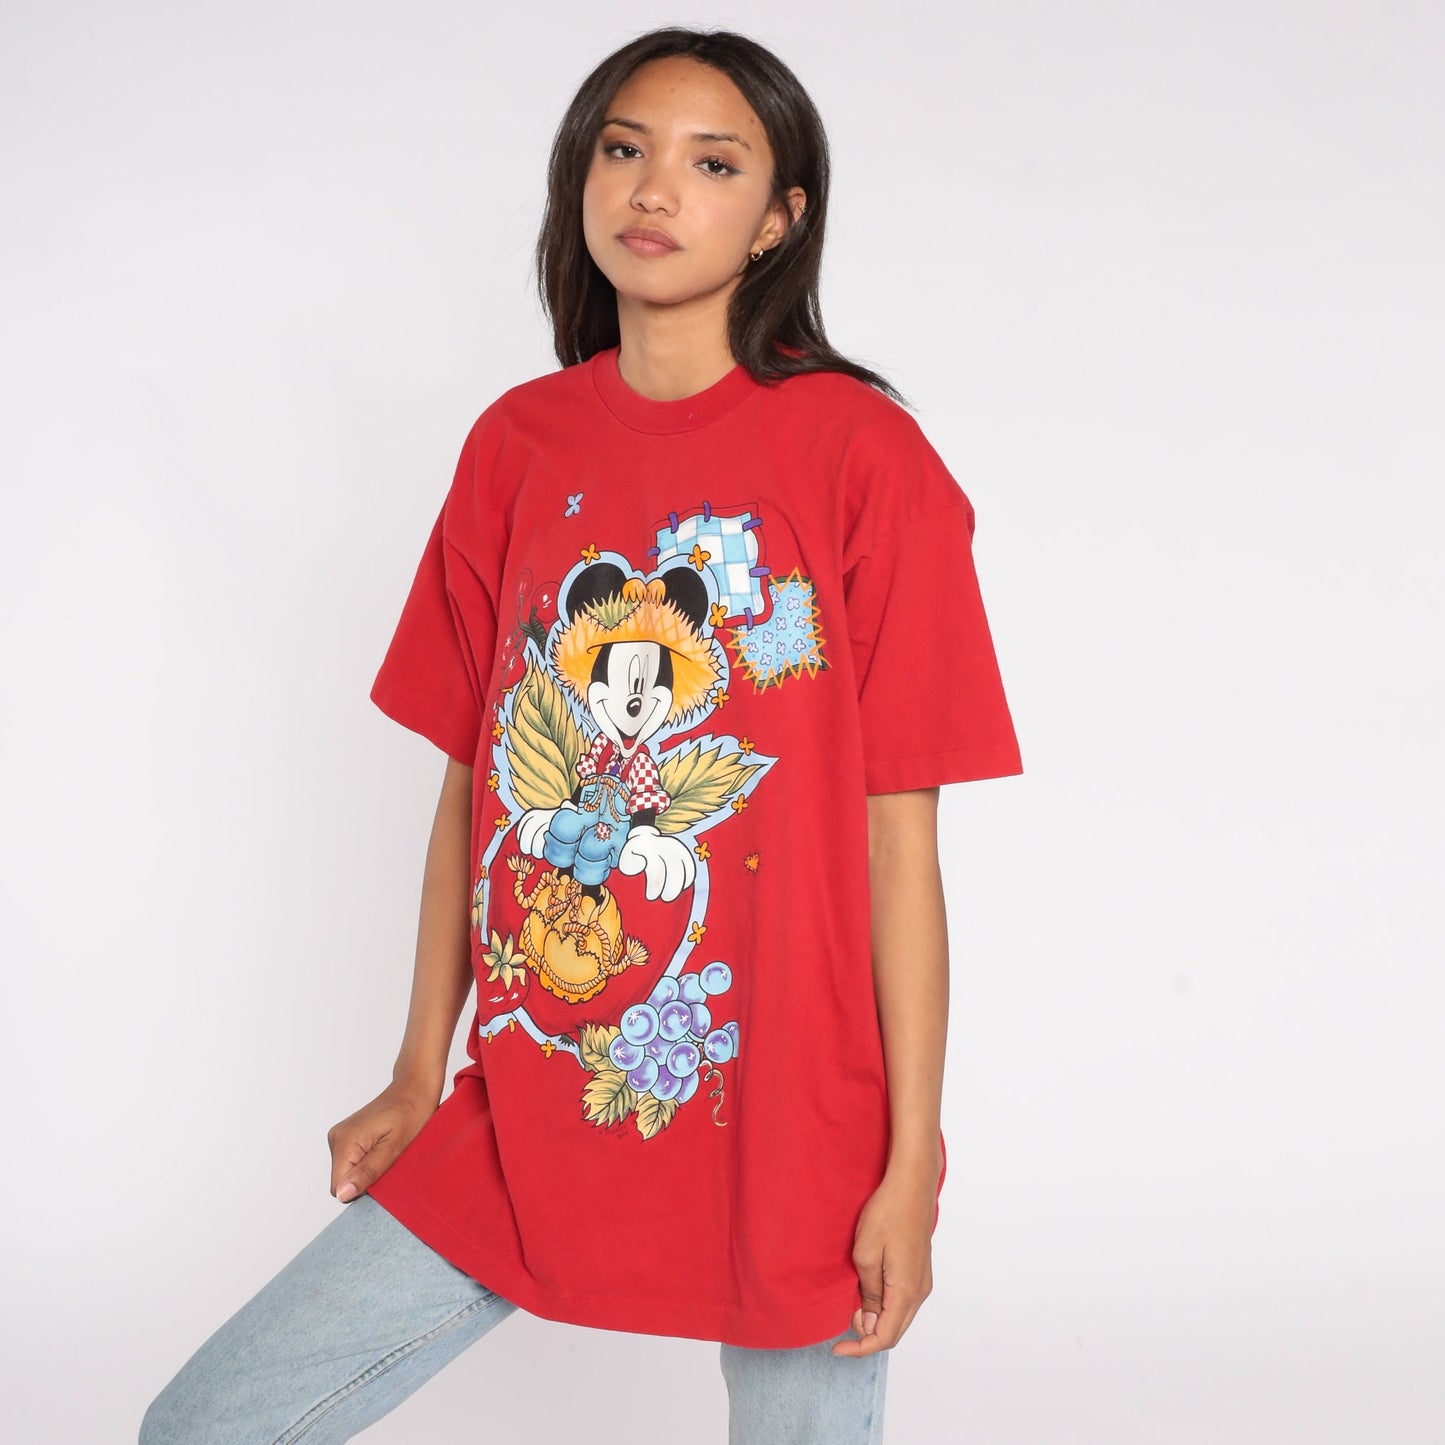 90s Mickey Mouse TShirt -- Farmer Walt Disney Shirt 1990s Country Fruit Graphic Cartoon T Shirt Vintage Retro Tee Red Shirt Extra Large xl